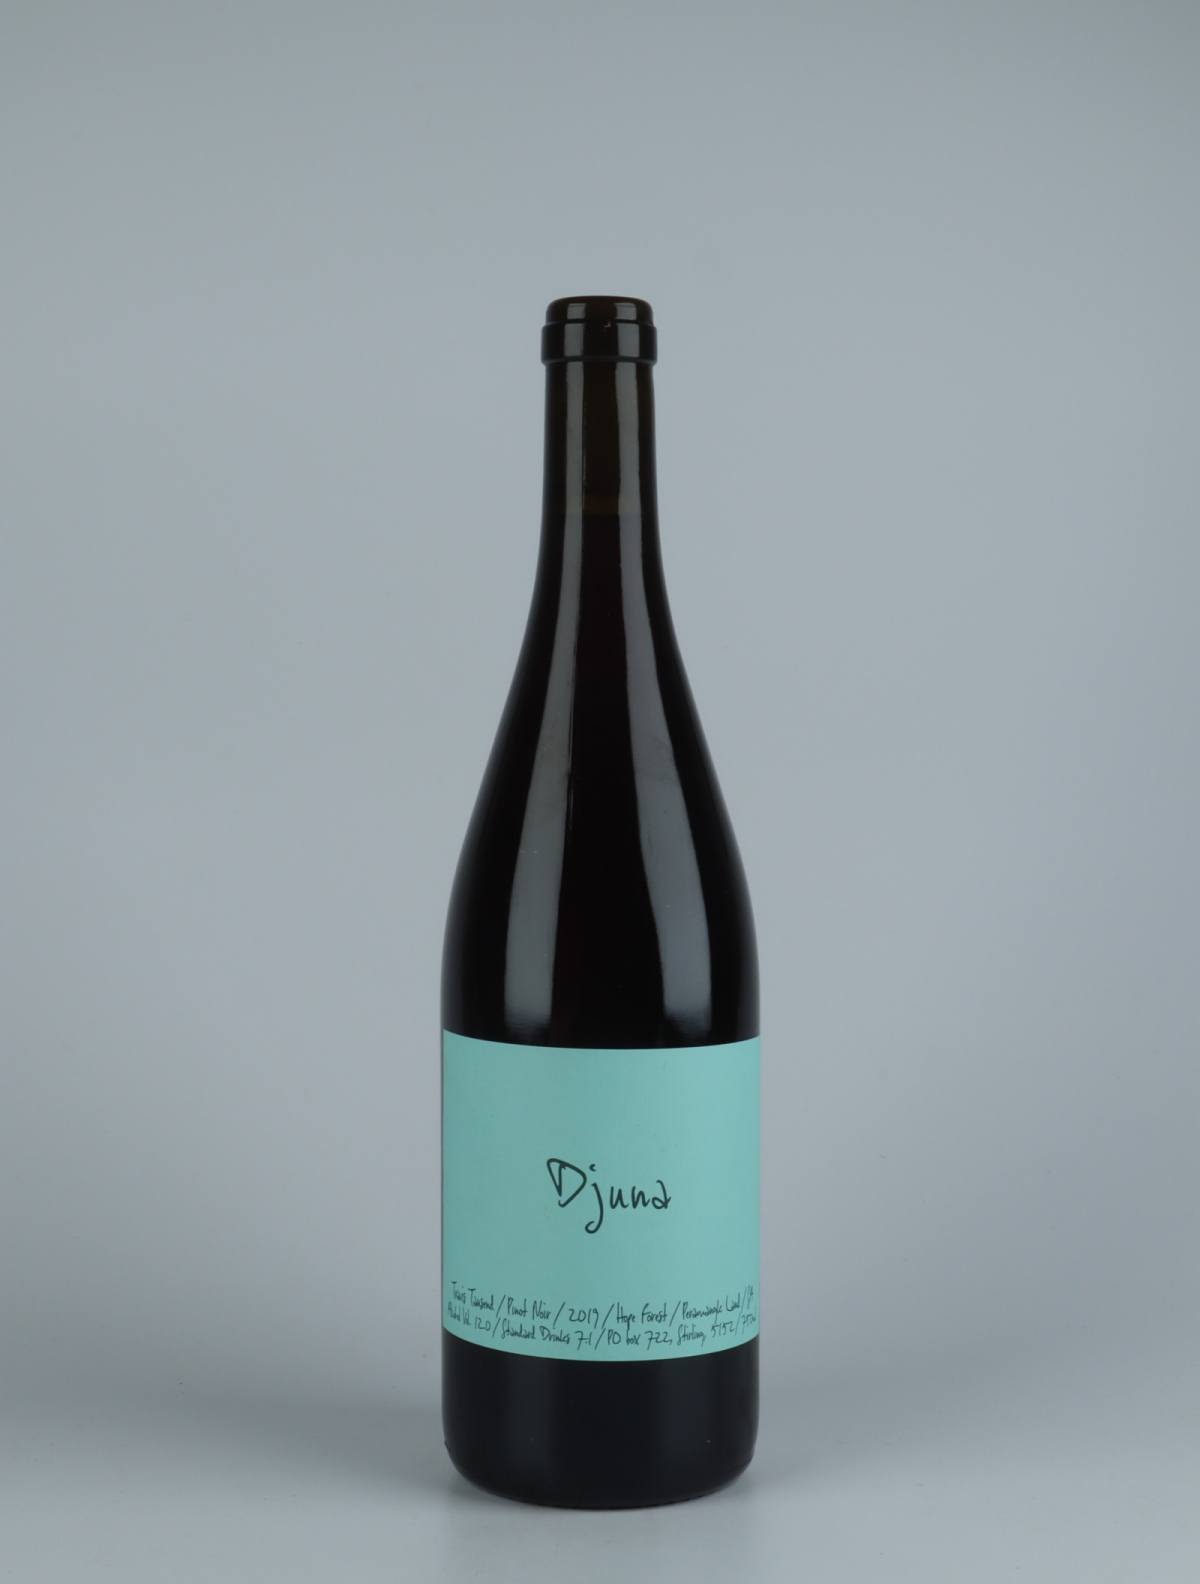 A bottle 2019 Djuna Pinot Noir Red wine from Travis Tausend, Adelaide Hills in Australia